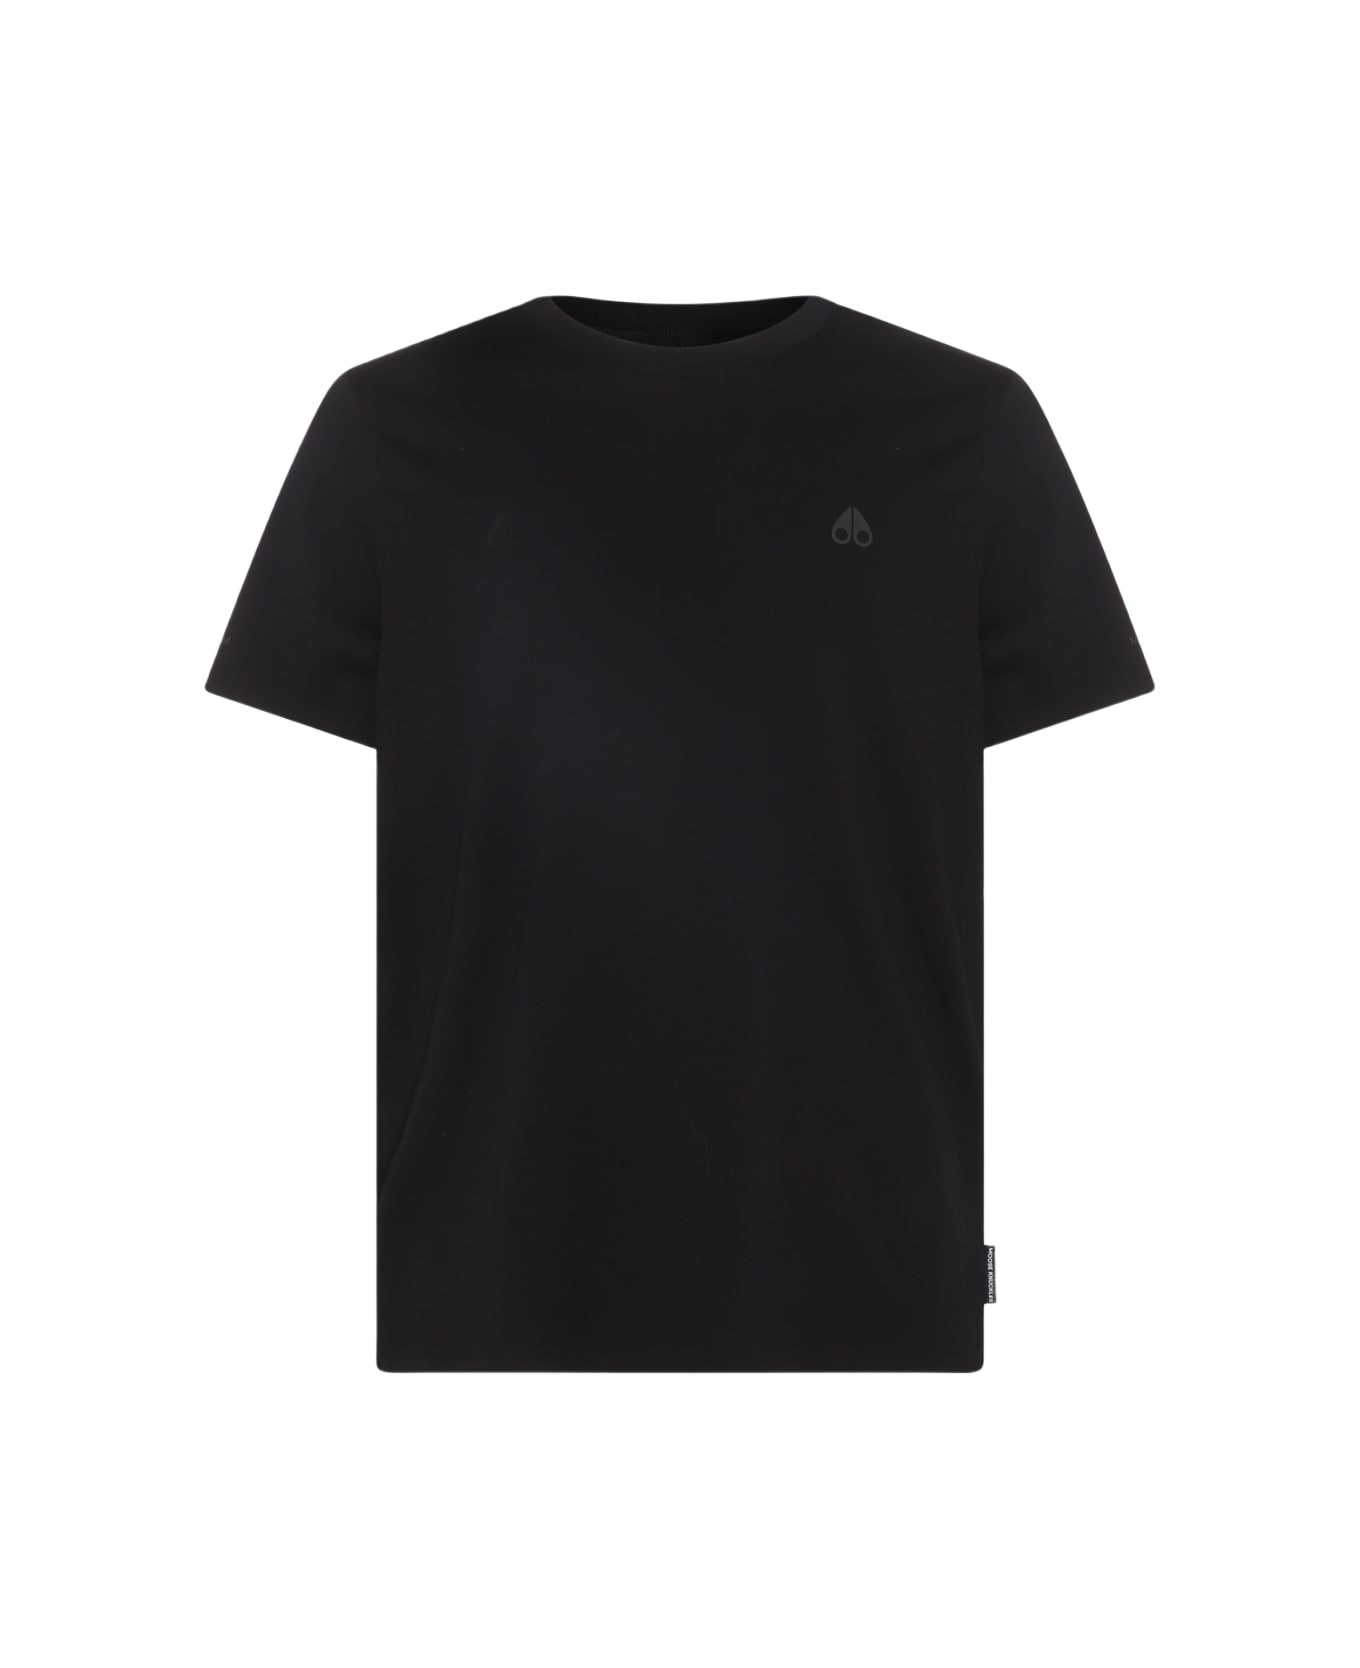 Moose Knuckles Black Cotton T-shirt - Black